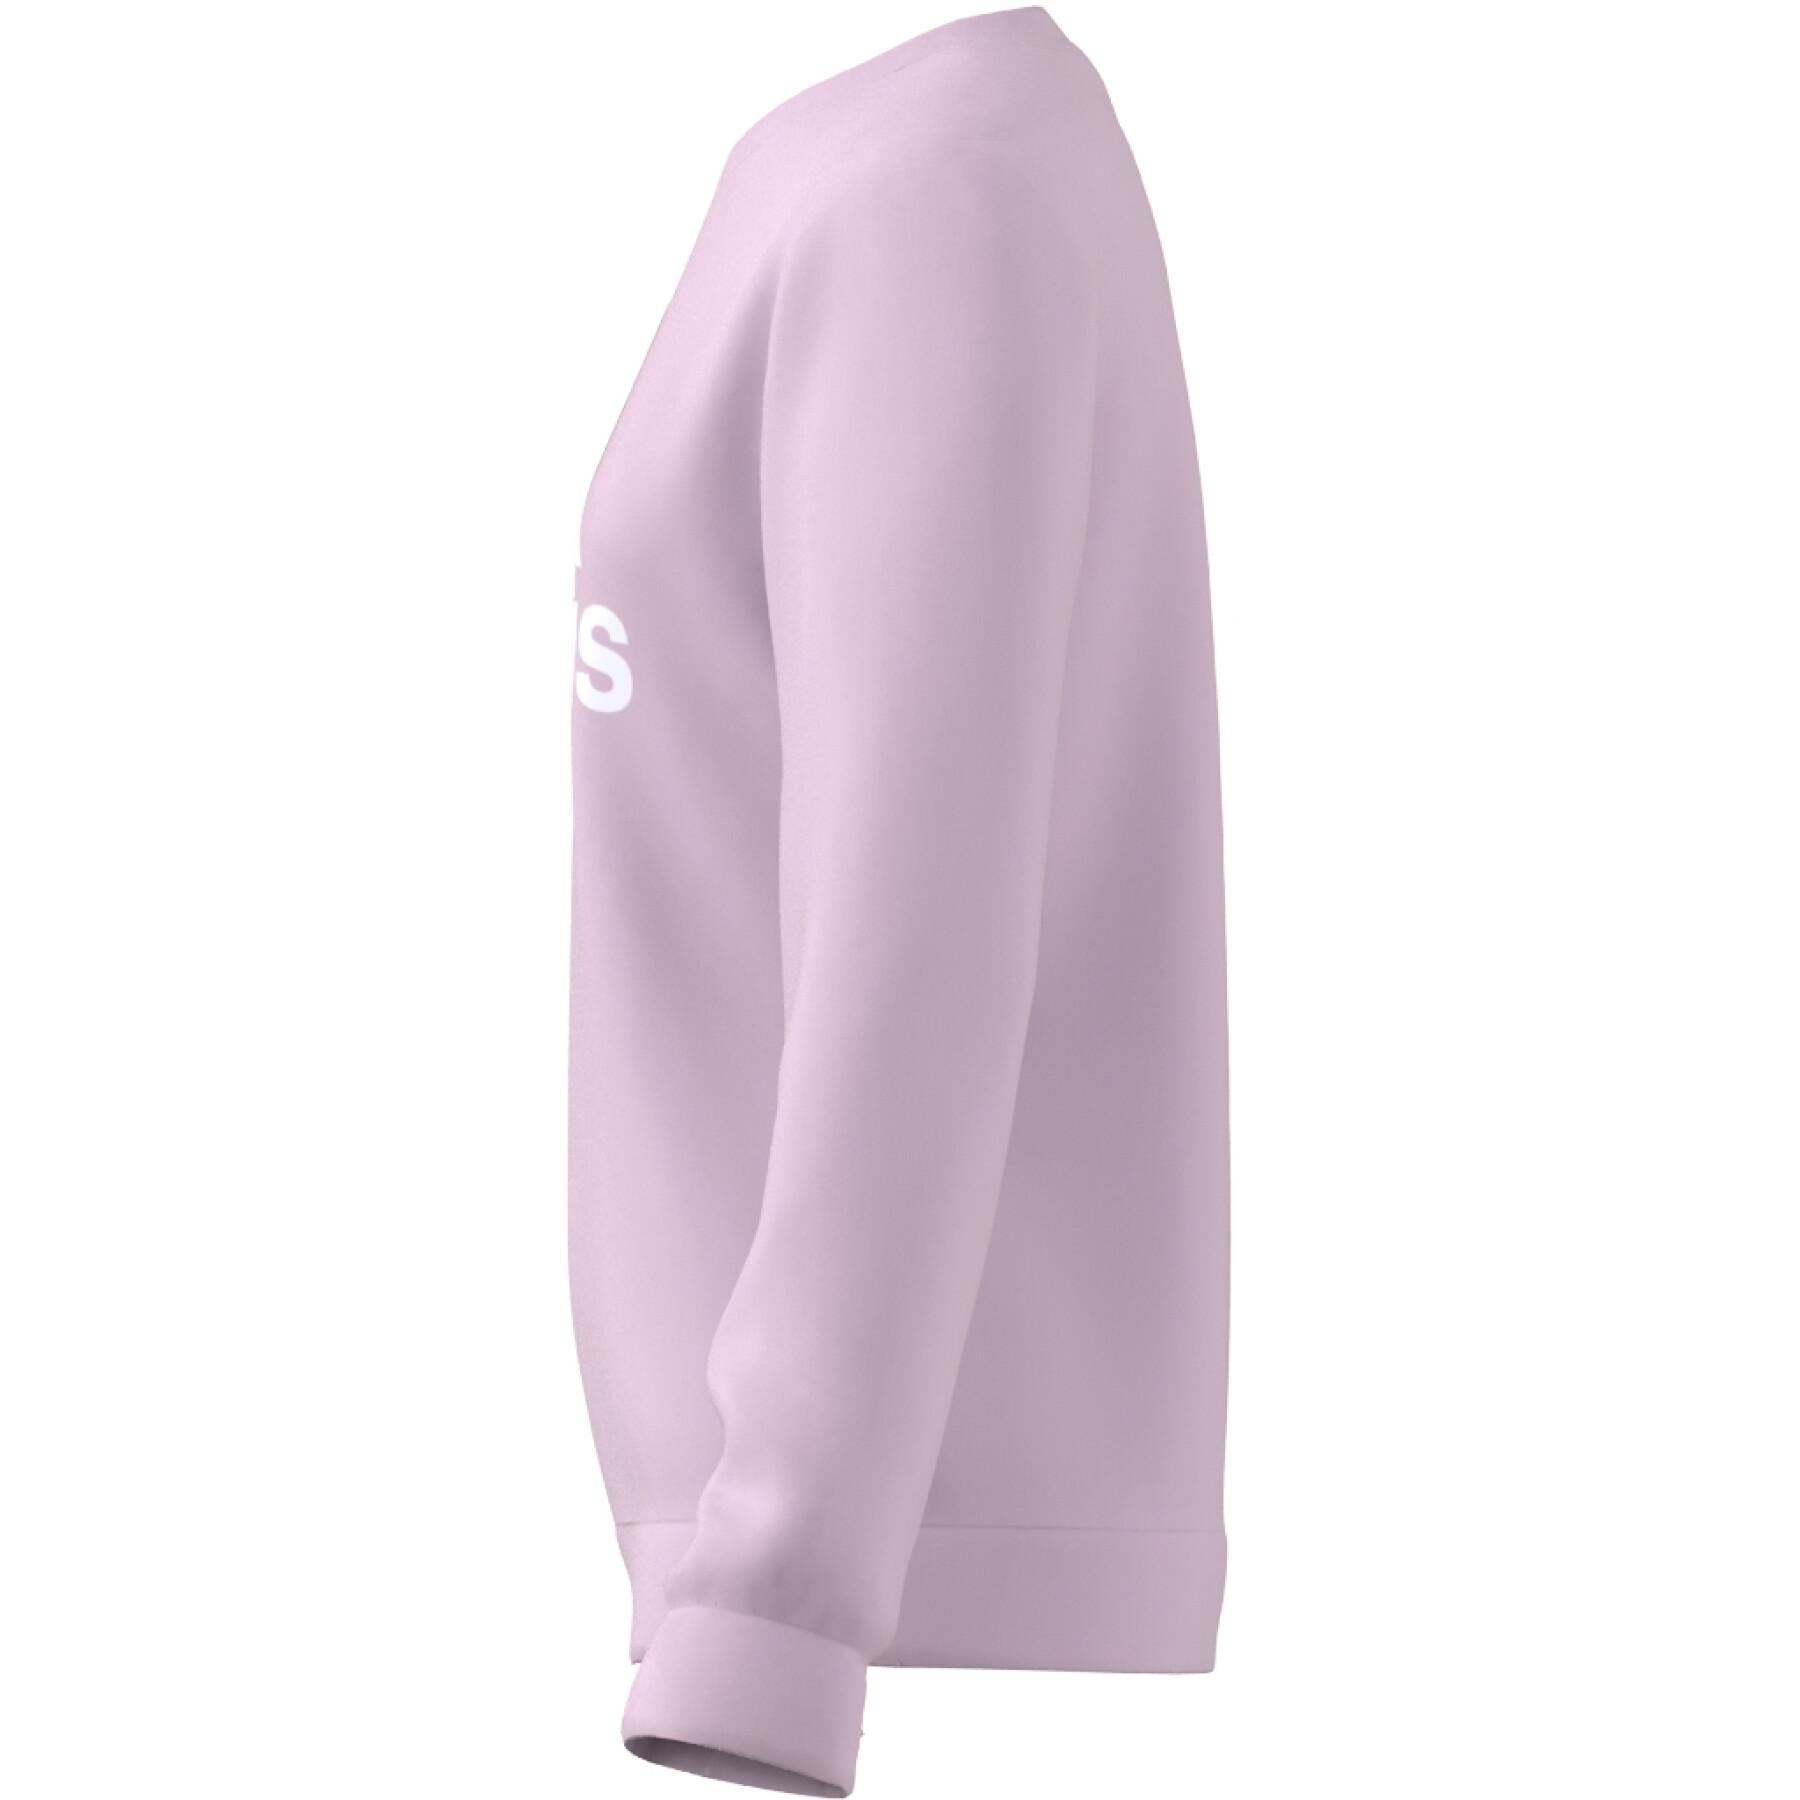 Sweatshirt grand logo coton fille adidas Essentials